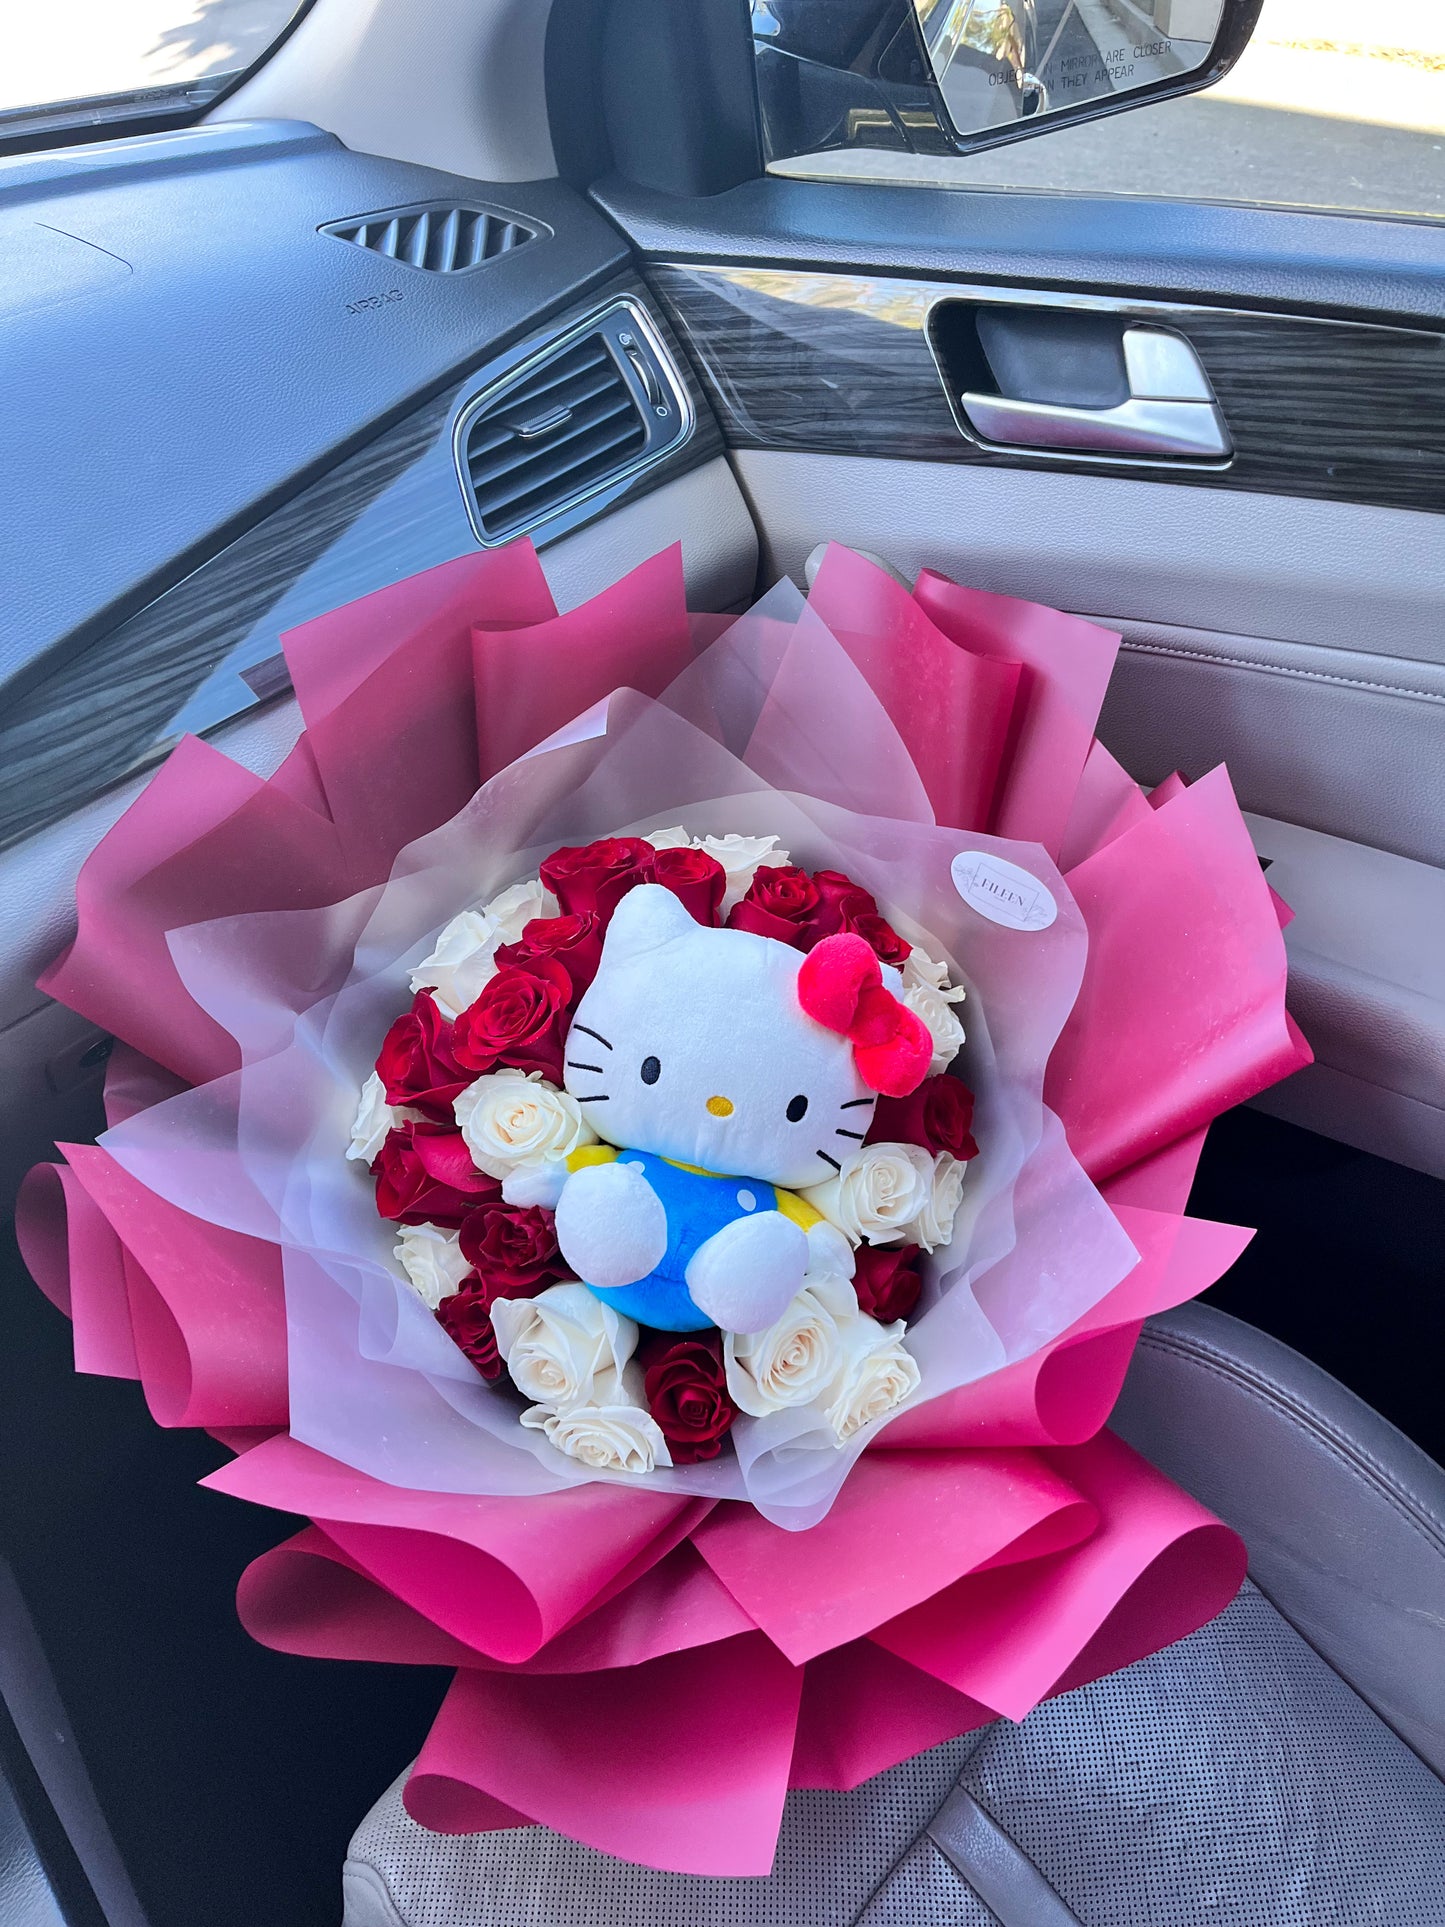 Sanrio Plush Bouquet (My Melody or Hello Kitty)